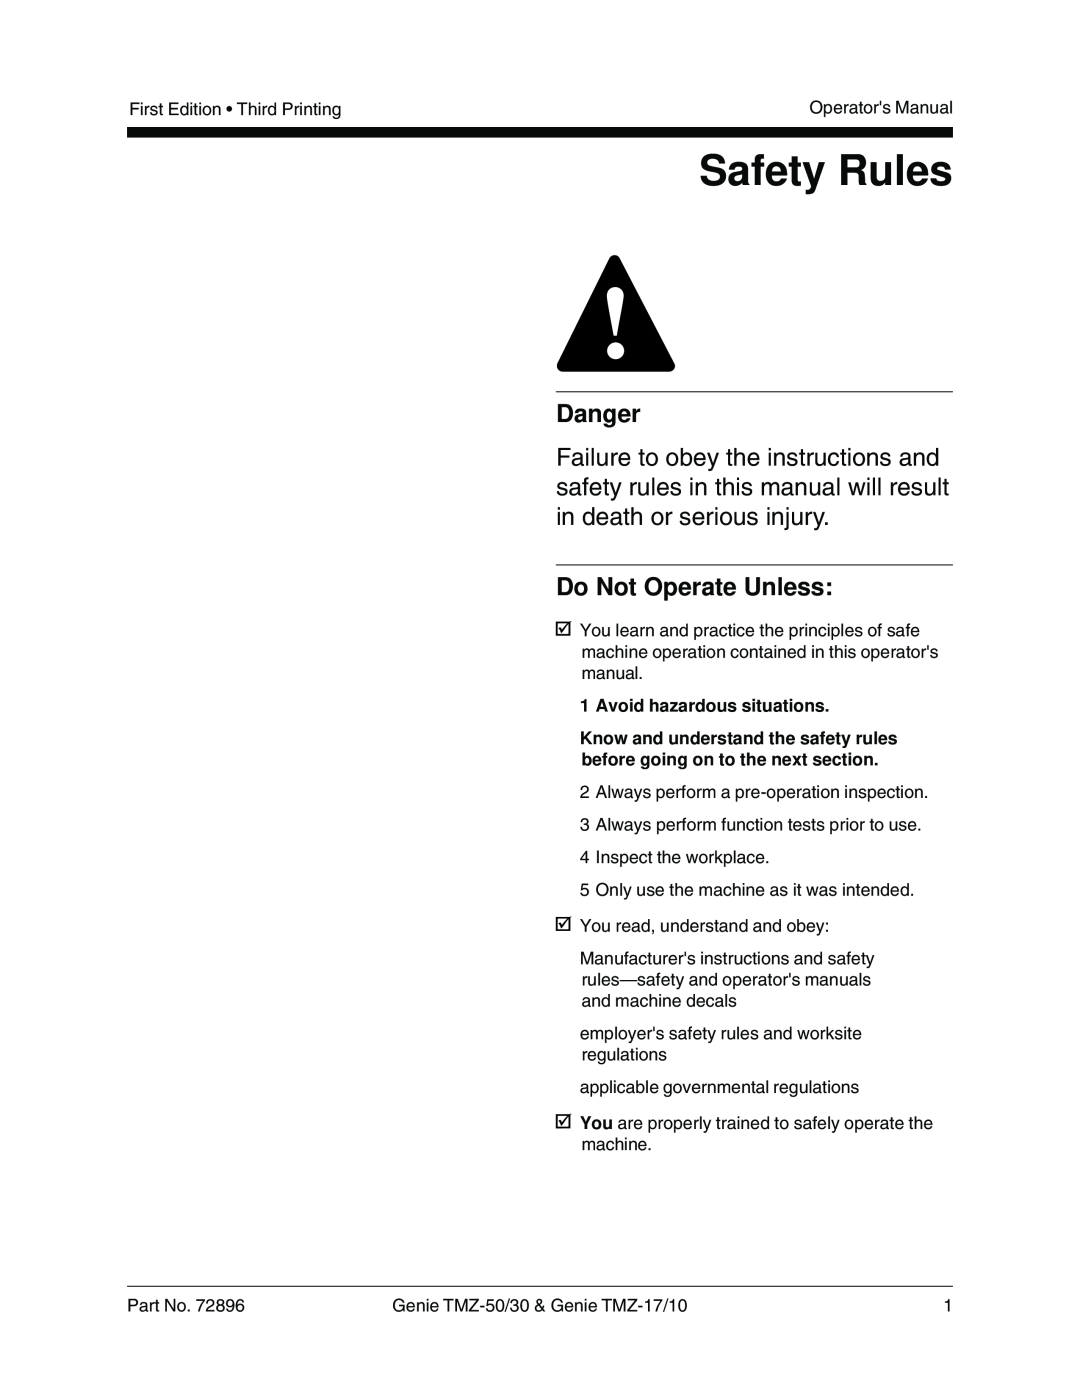 Genie TMZ-17, TMZ-10, TMZ-50, TMZ-30 manual Safety Rules, Danger, Do Not Operate Unless, Avoid hazardous situations 